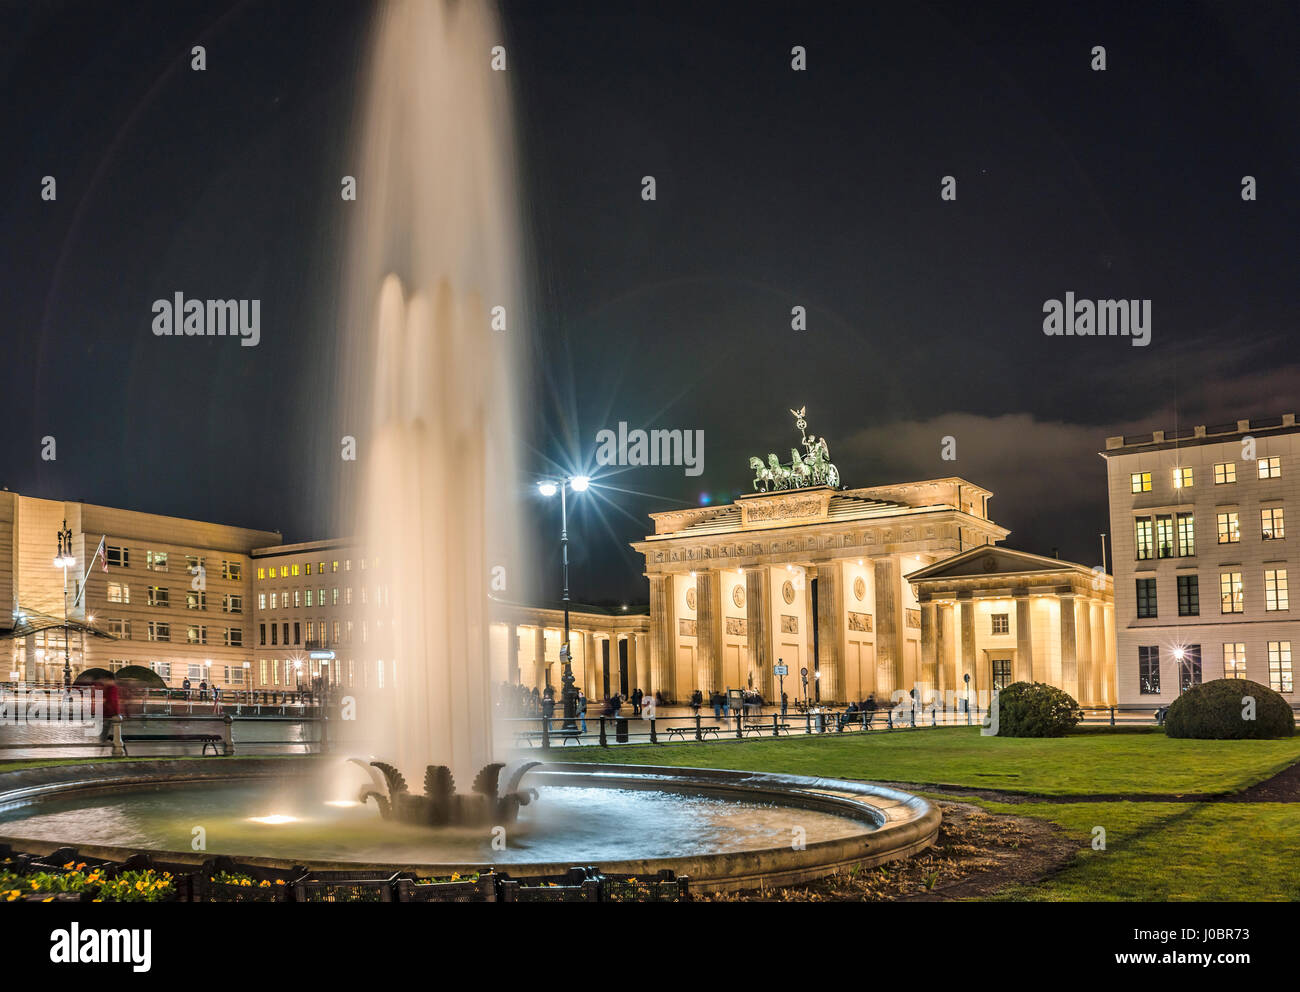 Brandenburger Tor bei nacht, Berlin, Deutschland Banque D'Images